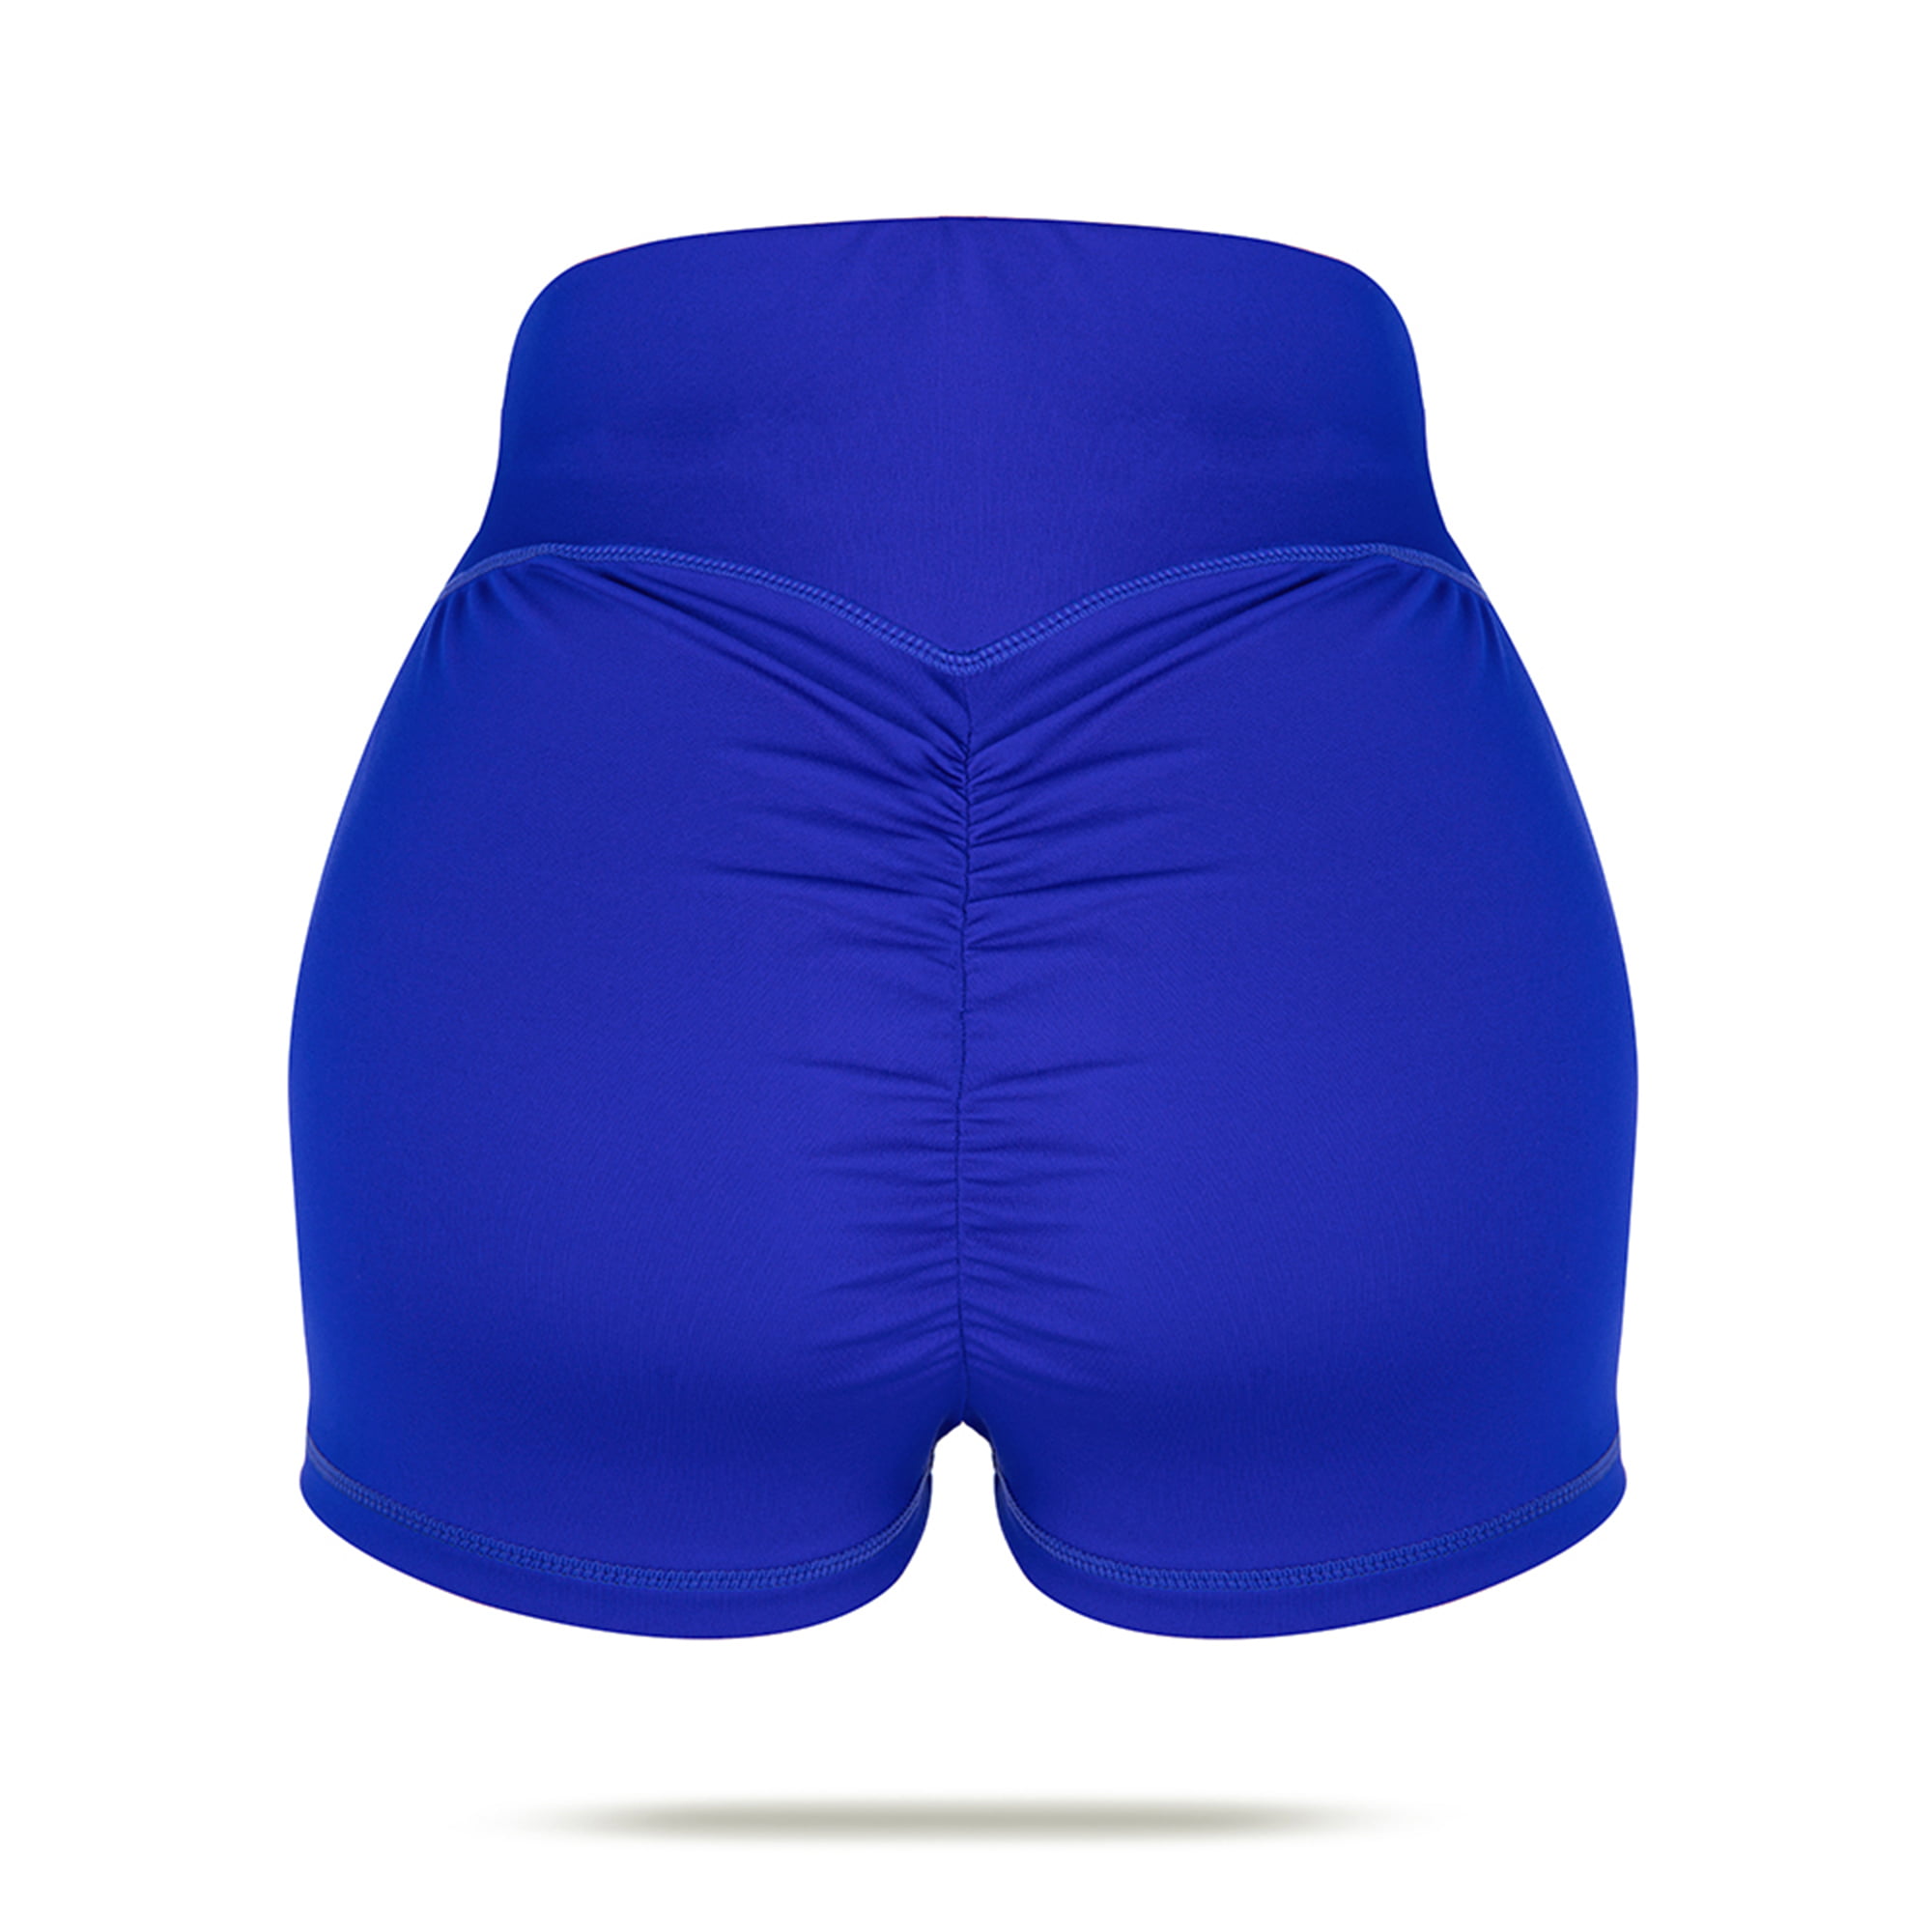 Workout Spandex Shorts for Women, High Waist Soft Yoga Bike Shorts, Blue, M  